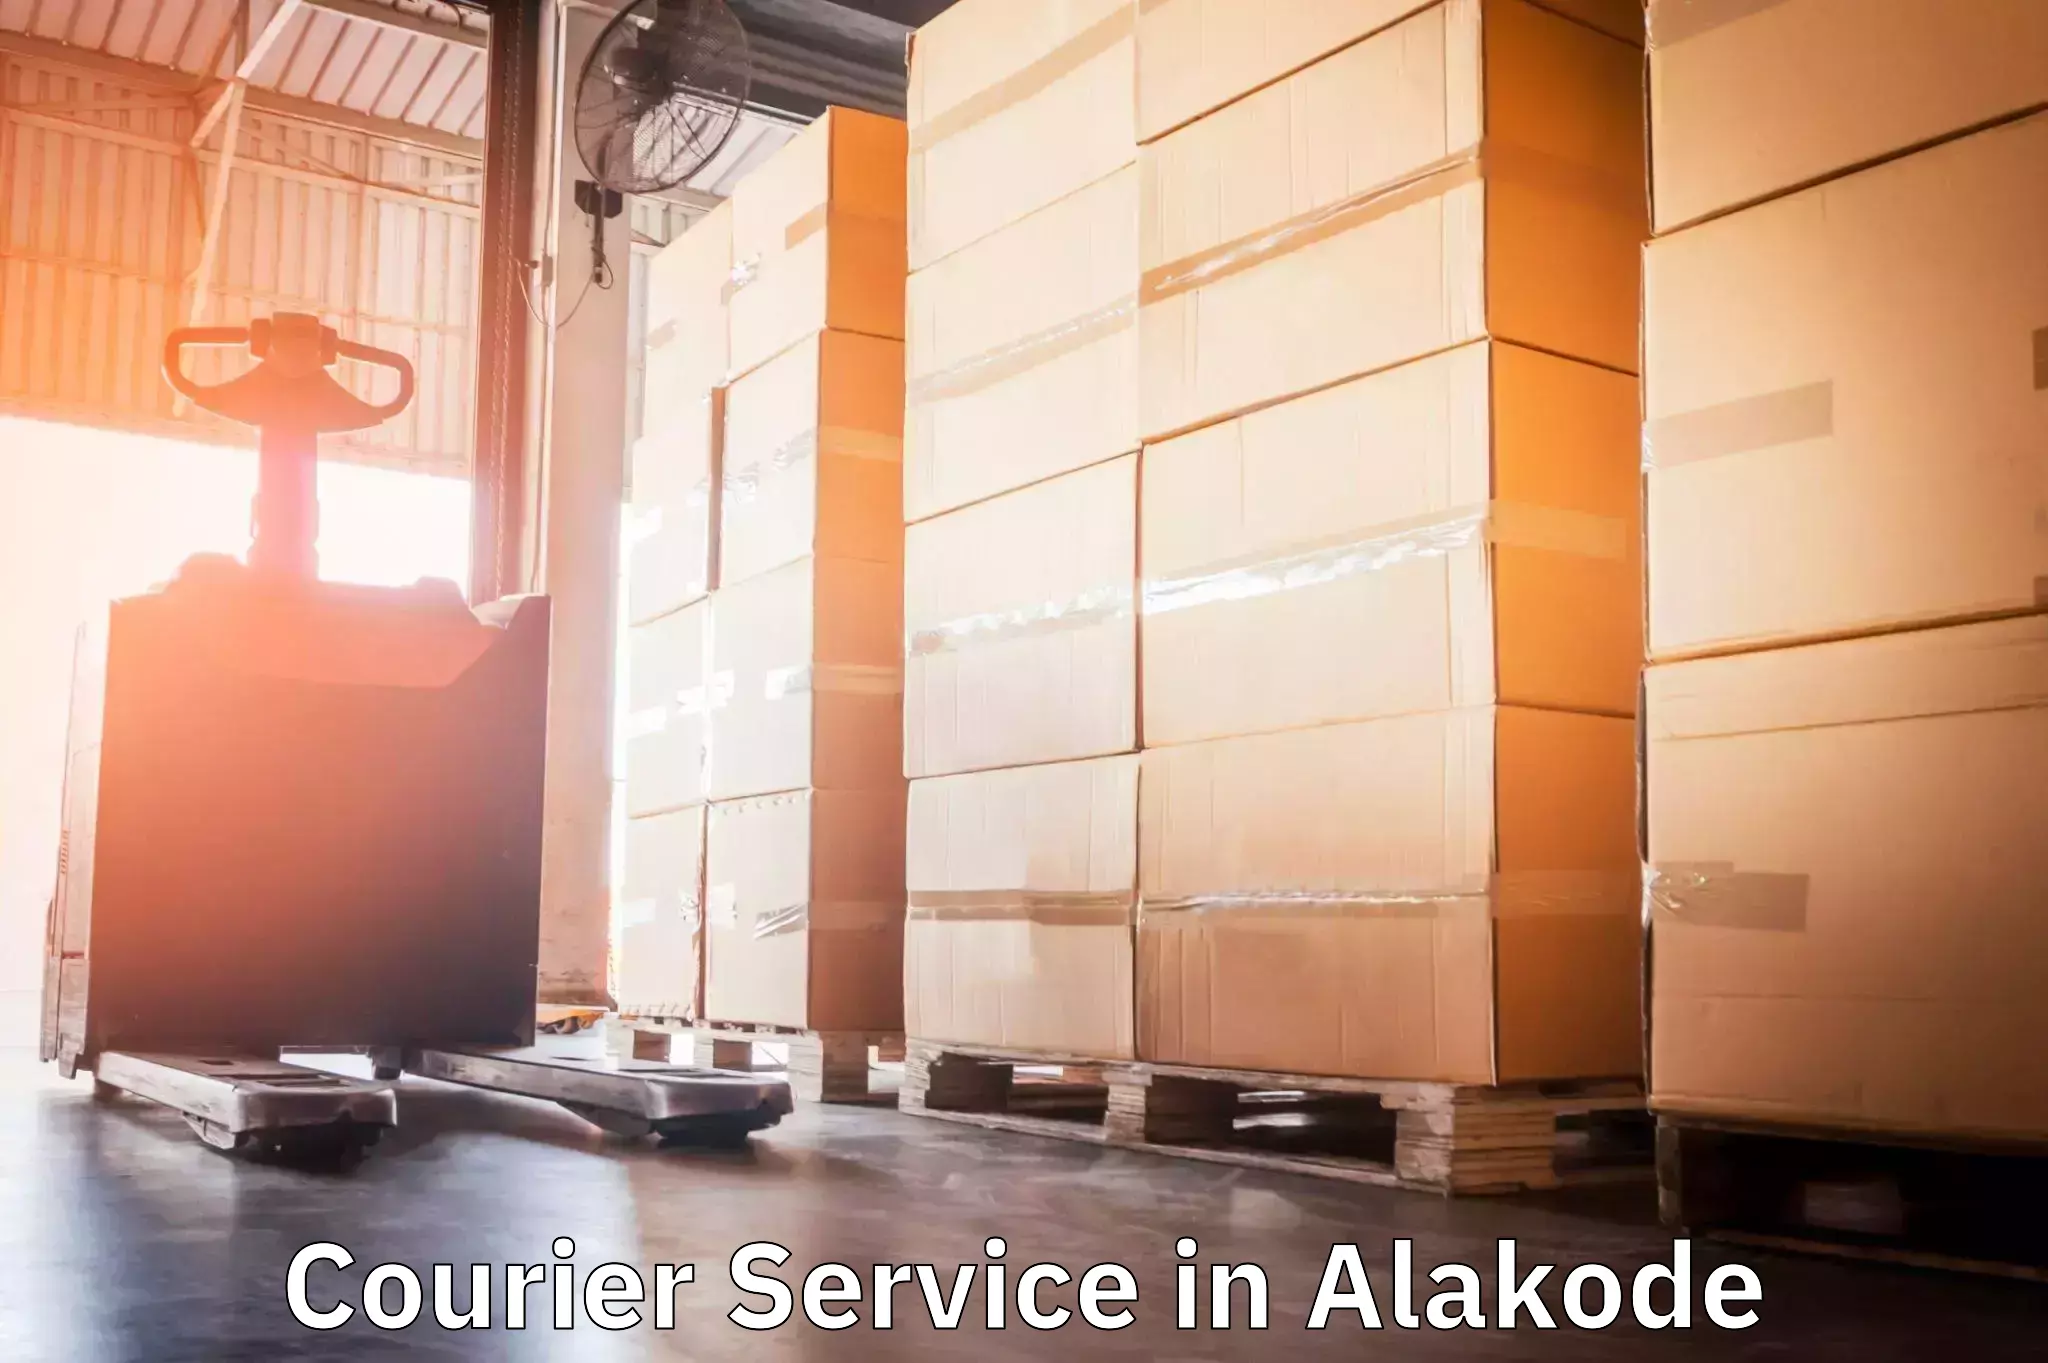 Customer-centric shipping in Alakode